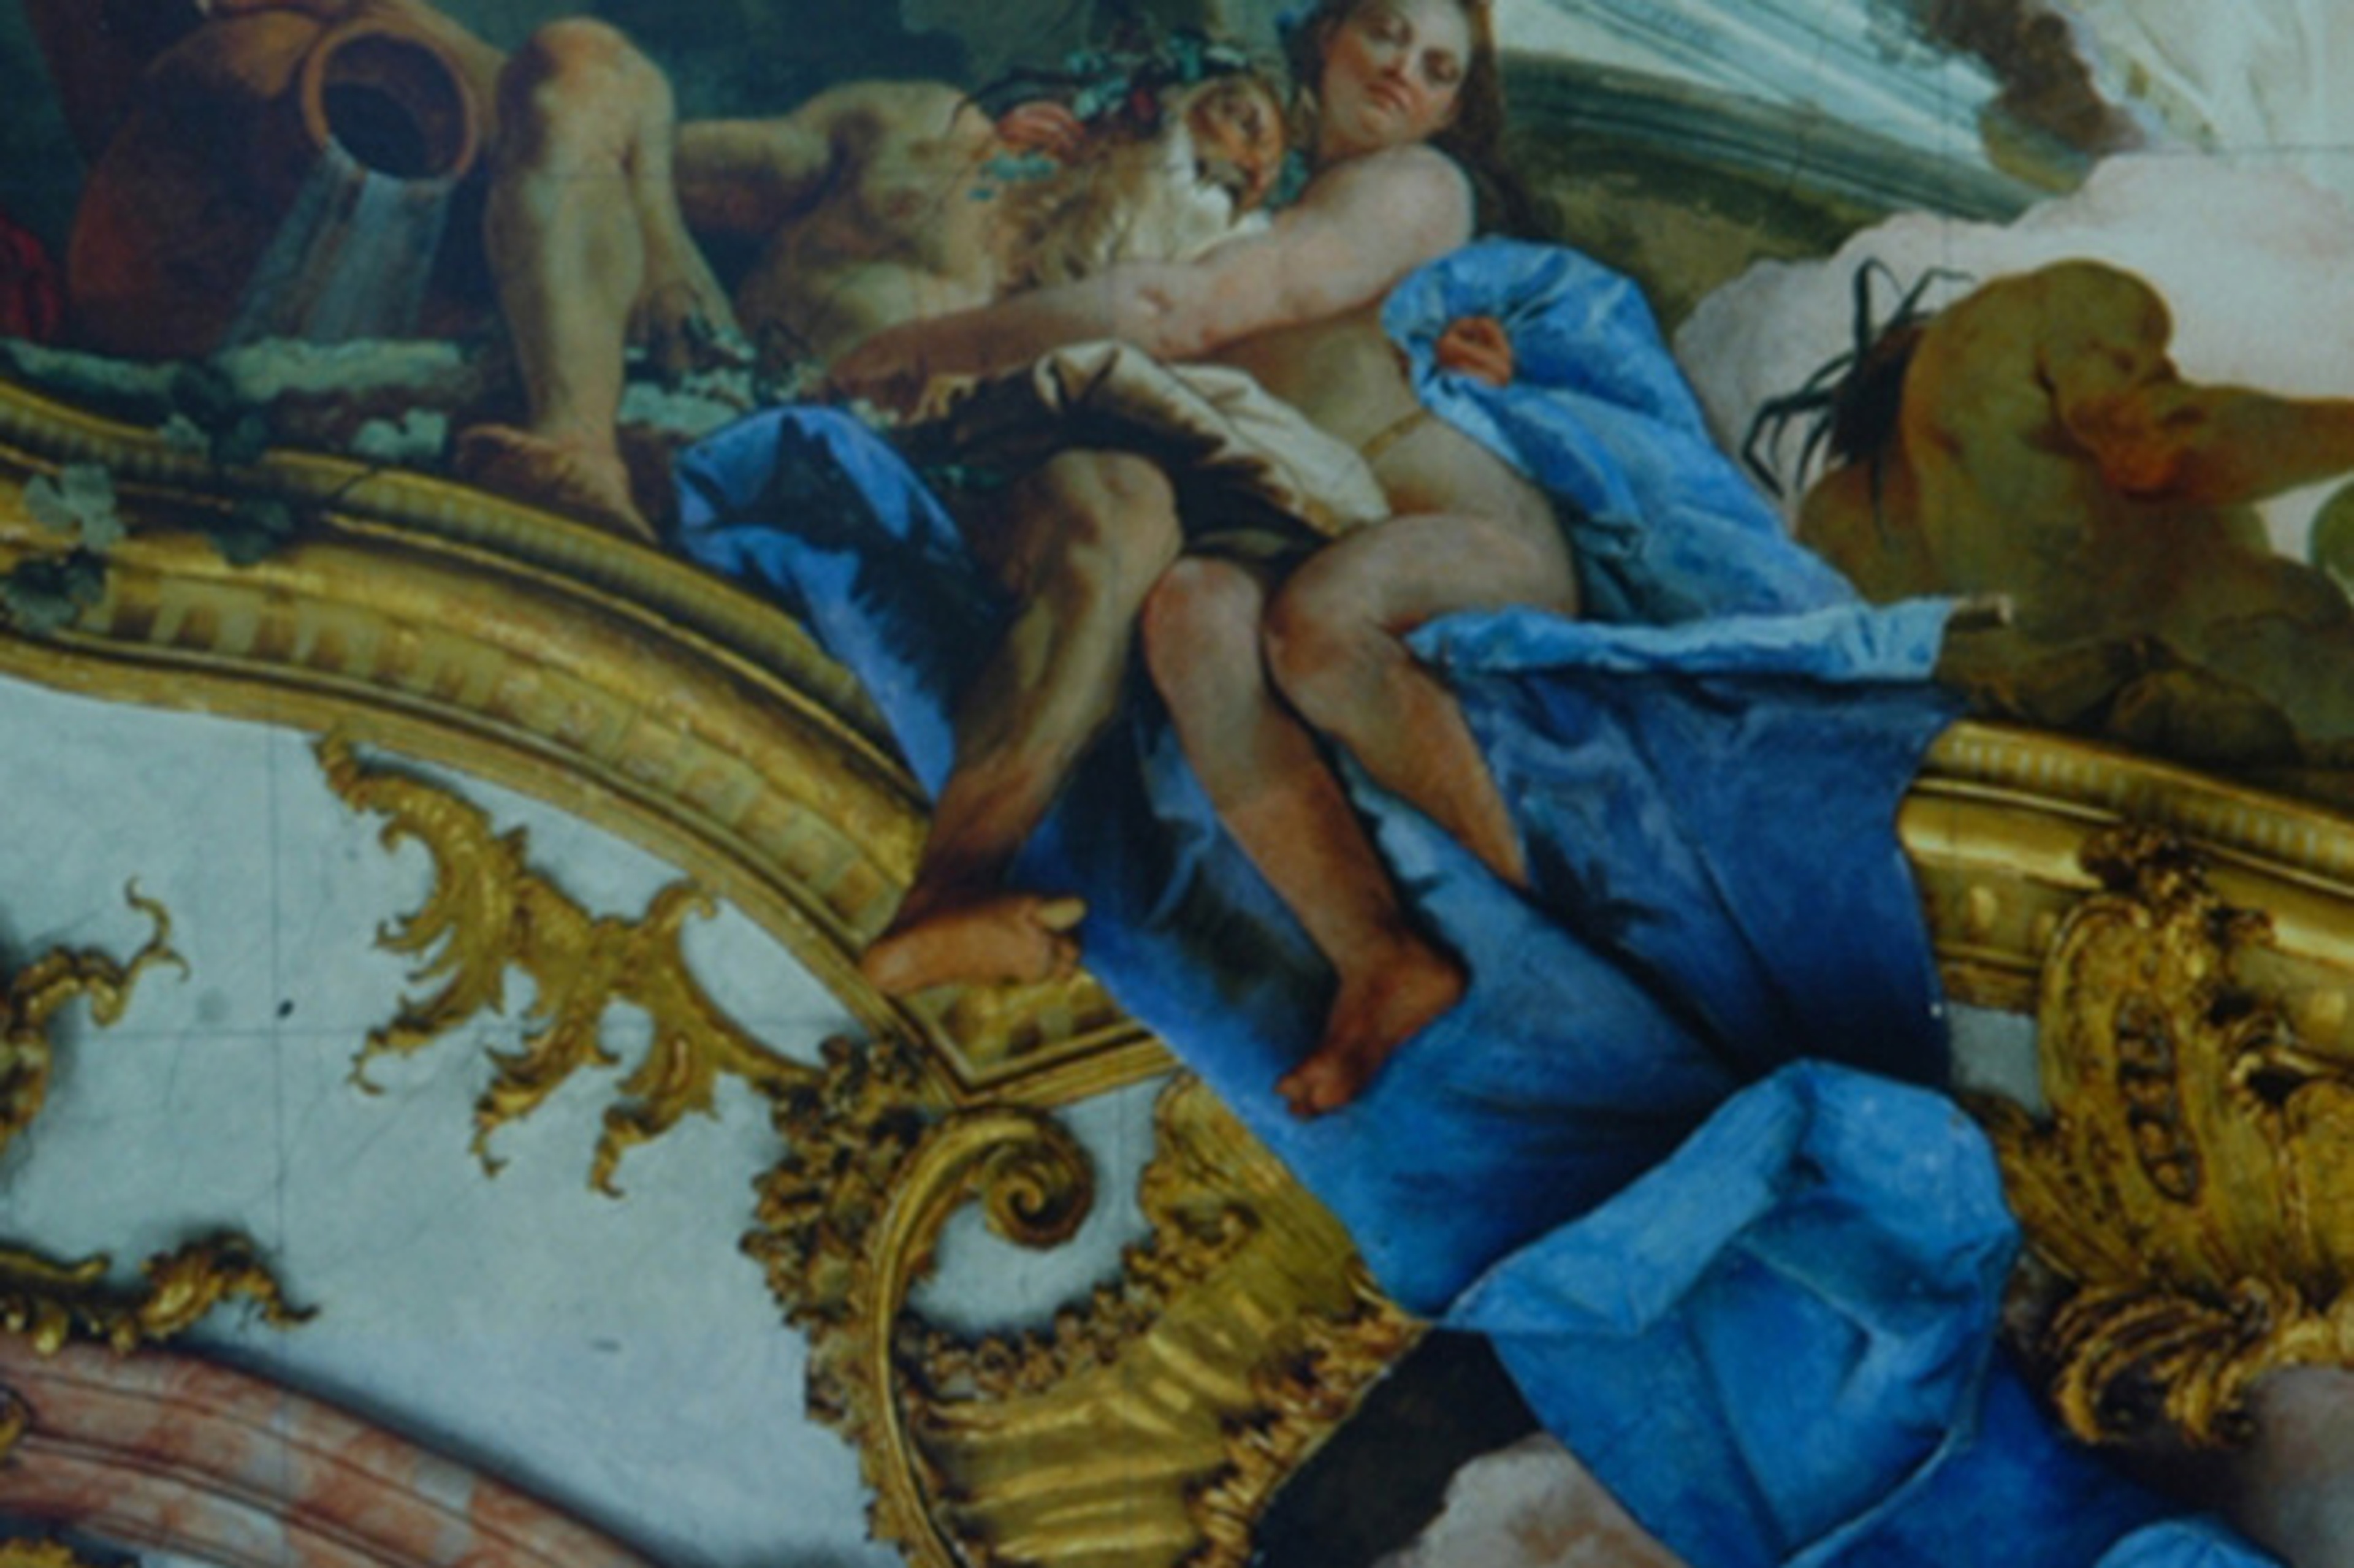 Paintings On The Wall - Giovanni Battista Tiepolo (1696-1770)